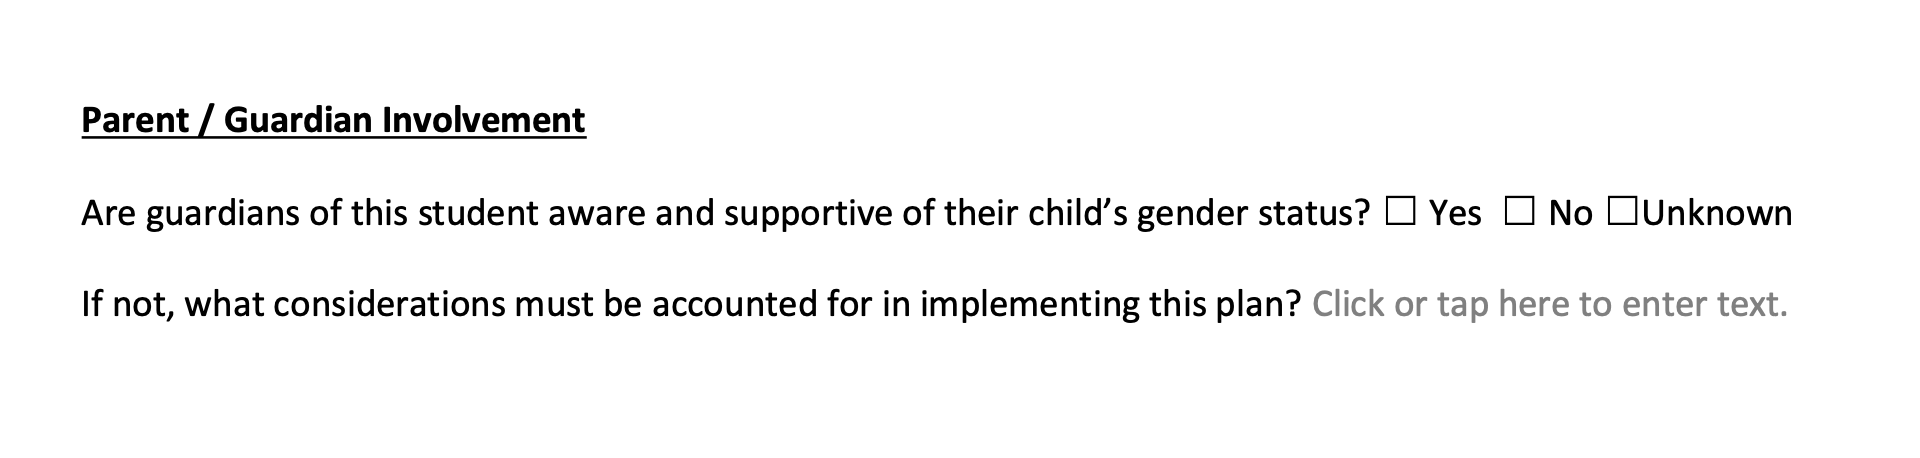 Screenshot/Parents Defending Education/https://defendinged.org/incidents/davison-community-schools-gender-support-plan-does-not-involve-parents-in-decision-making-for-their-children-scarlen/